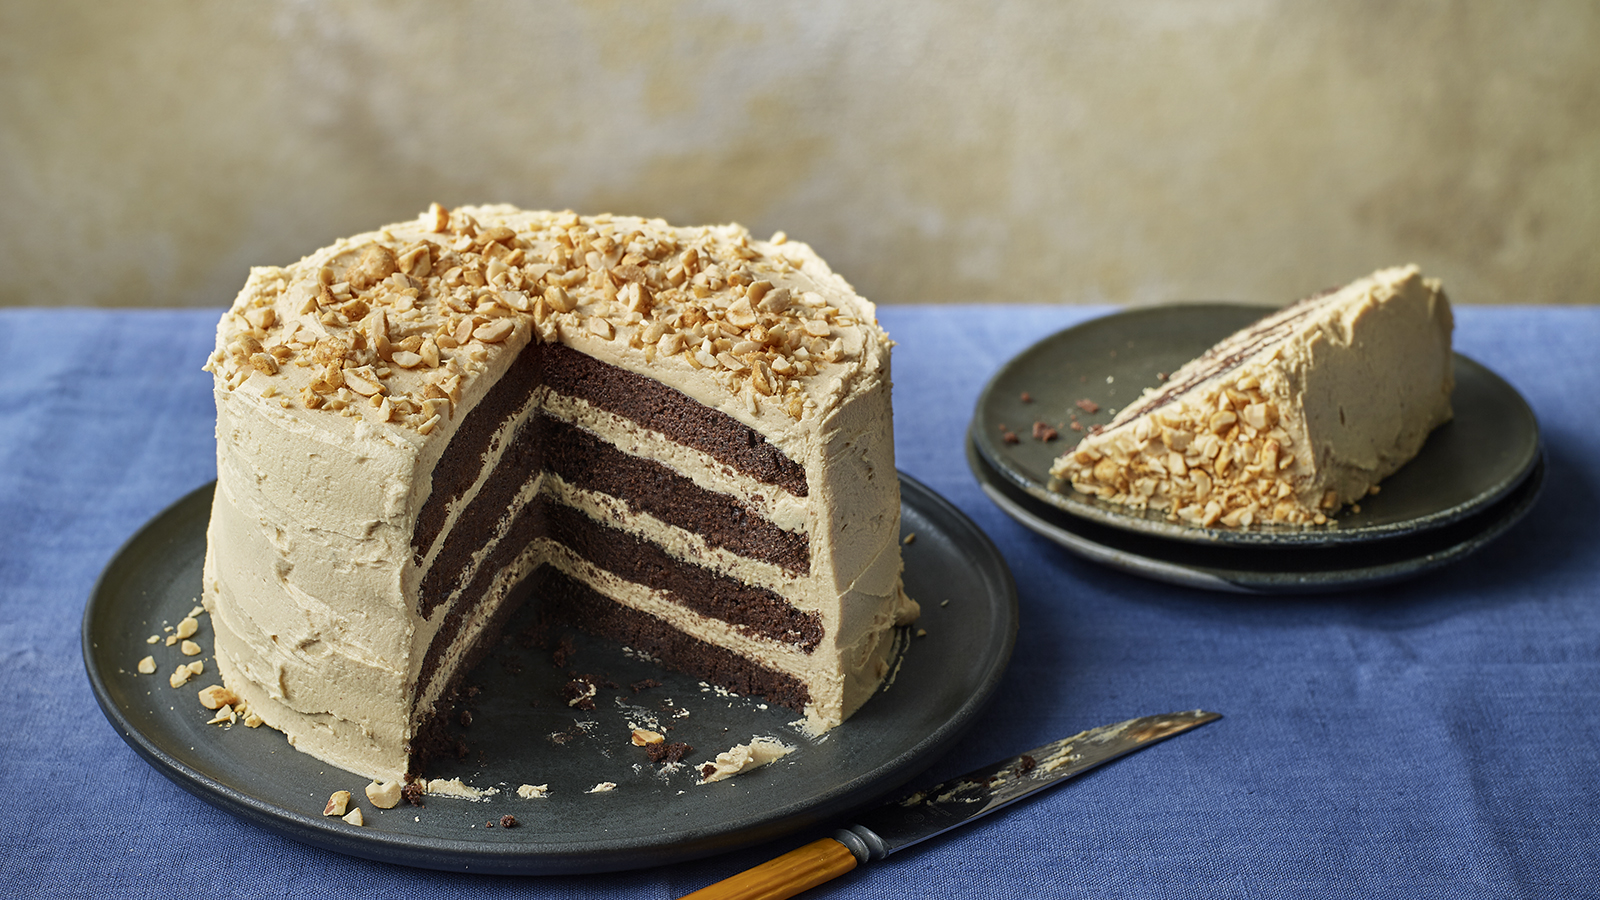 Chocolate peanut butter cake recipe - BBC Food